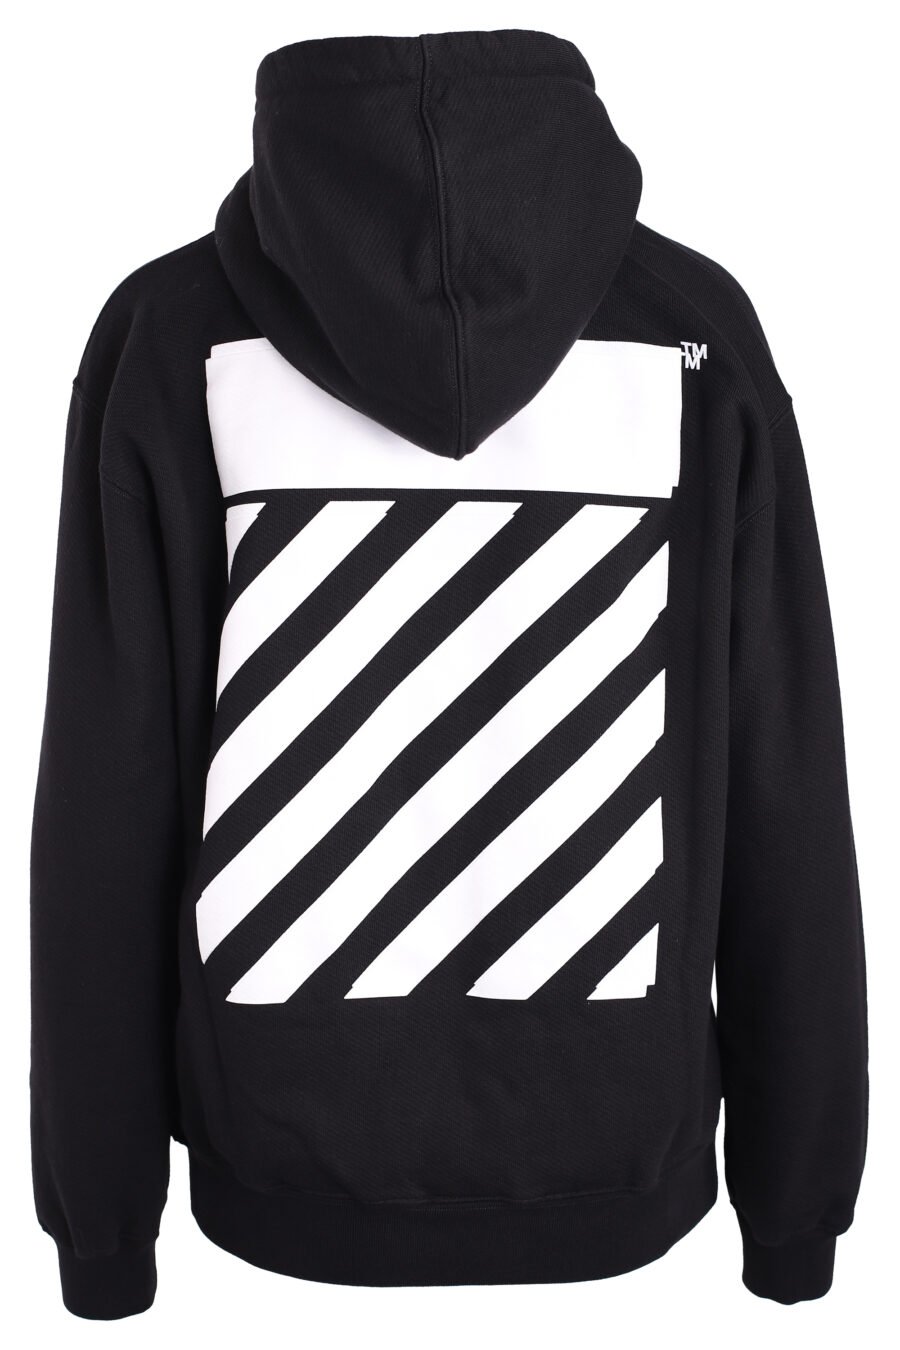 Sudadera negra con capucha logo blanco "Diagonal" - IMG 3400